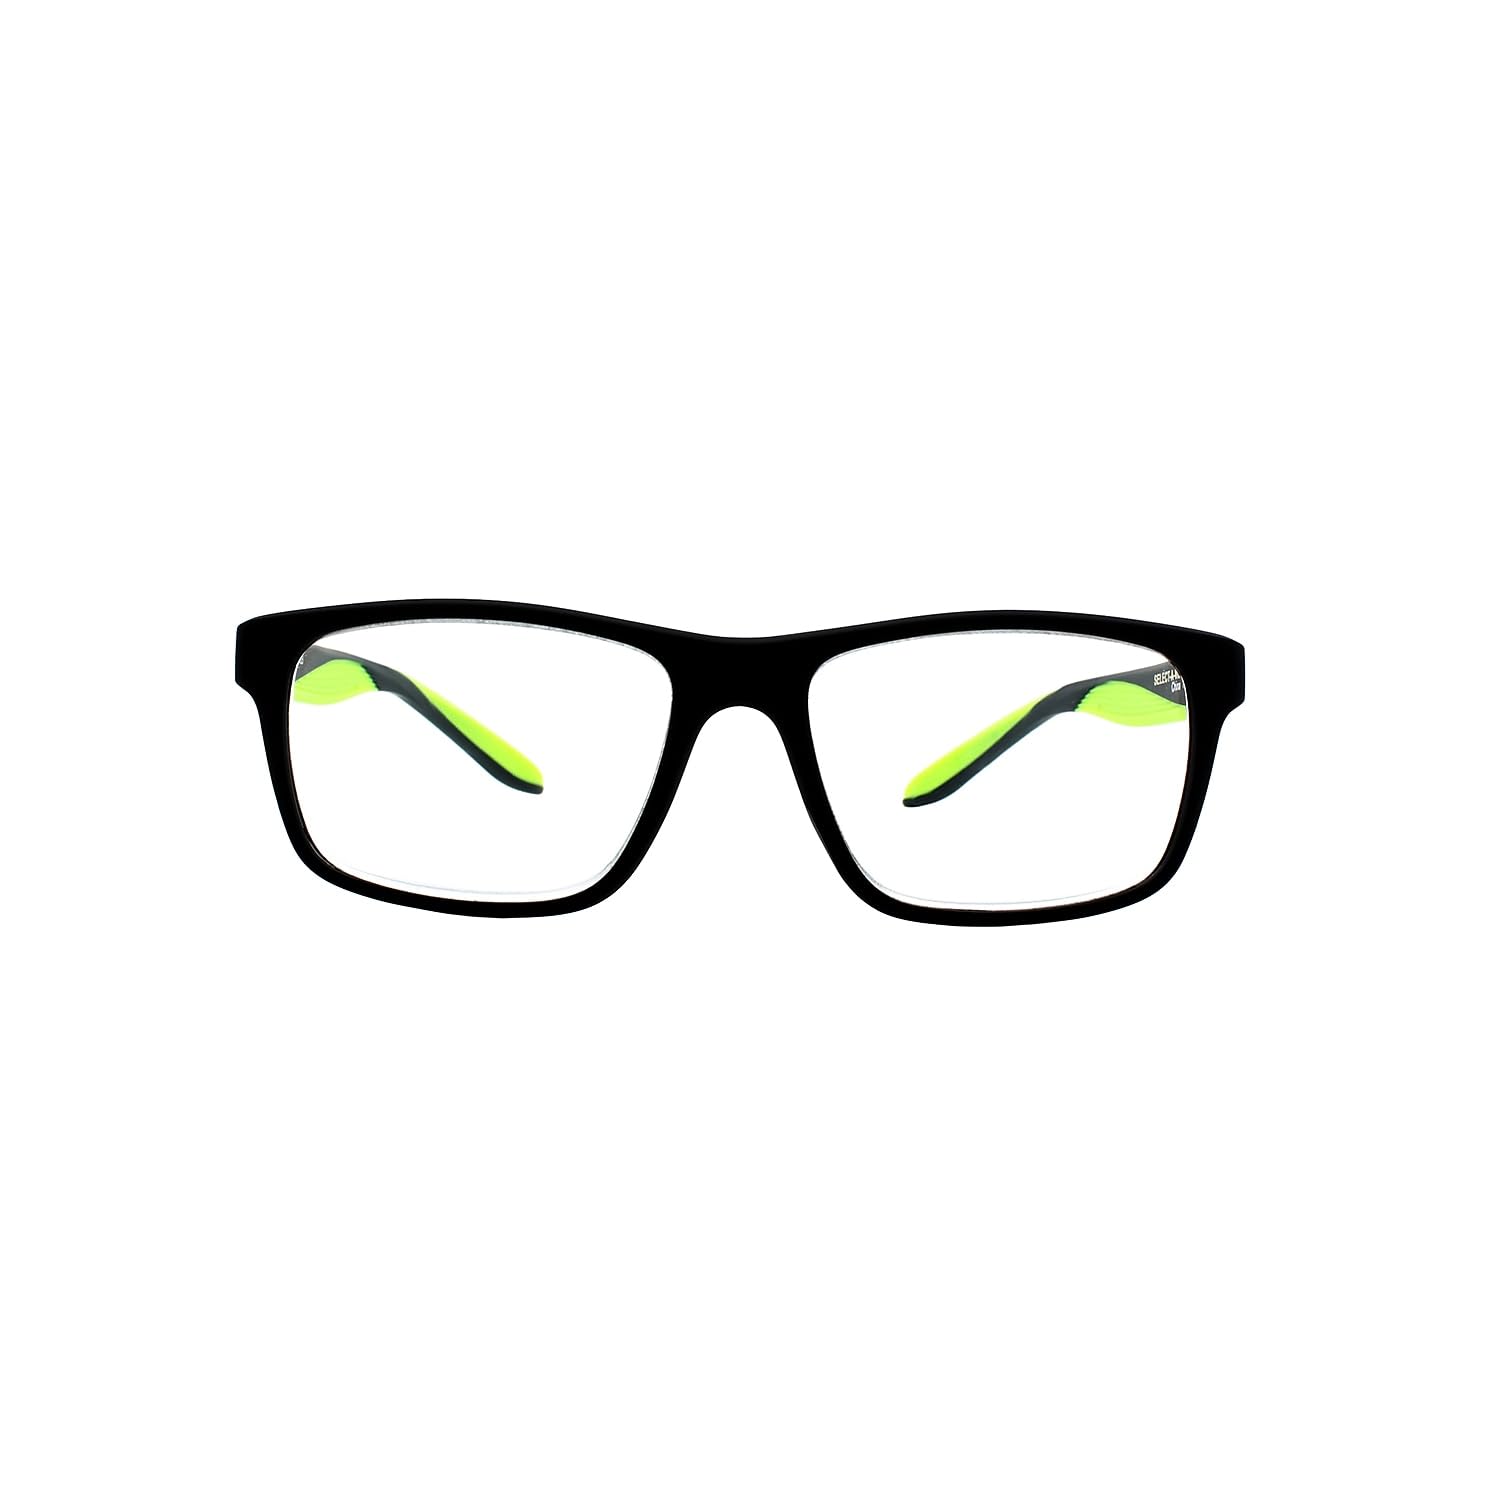 Select-A-Vision mens Sportex Ar4163 Sport Green Reading Glasses, Sport Green, 29 mm US